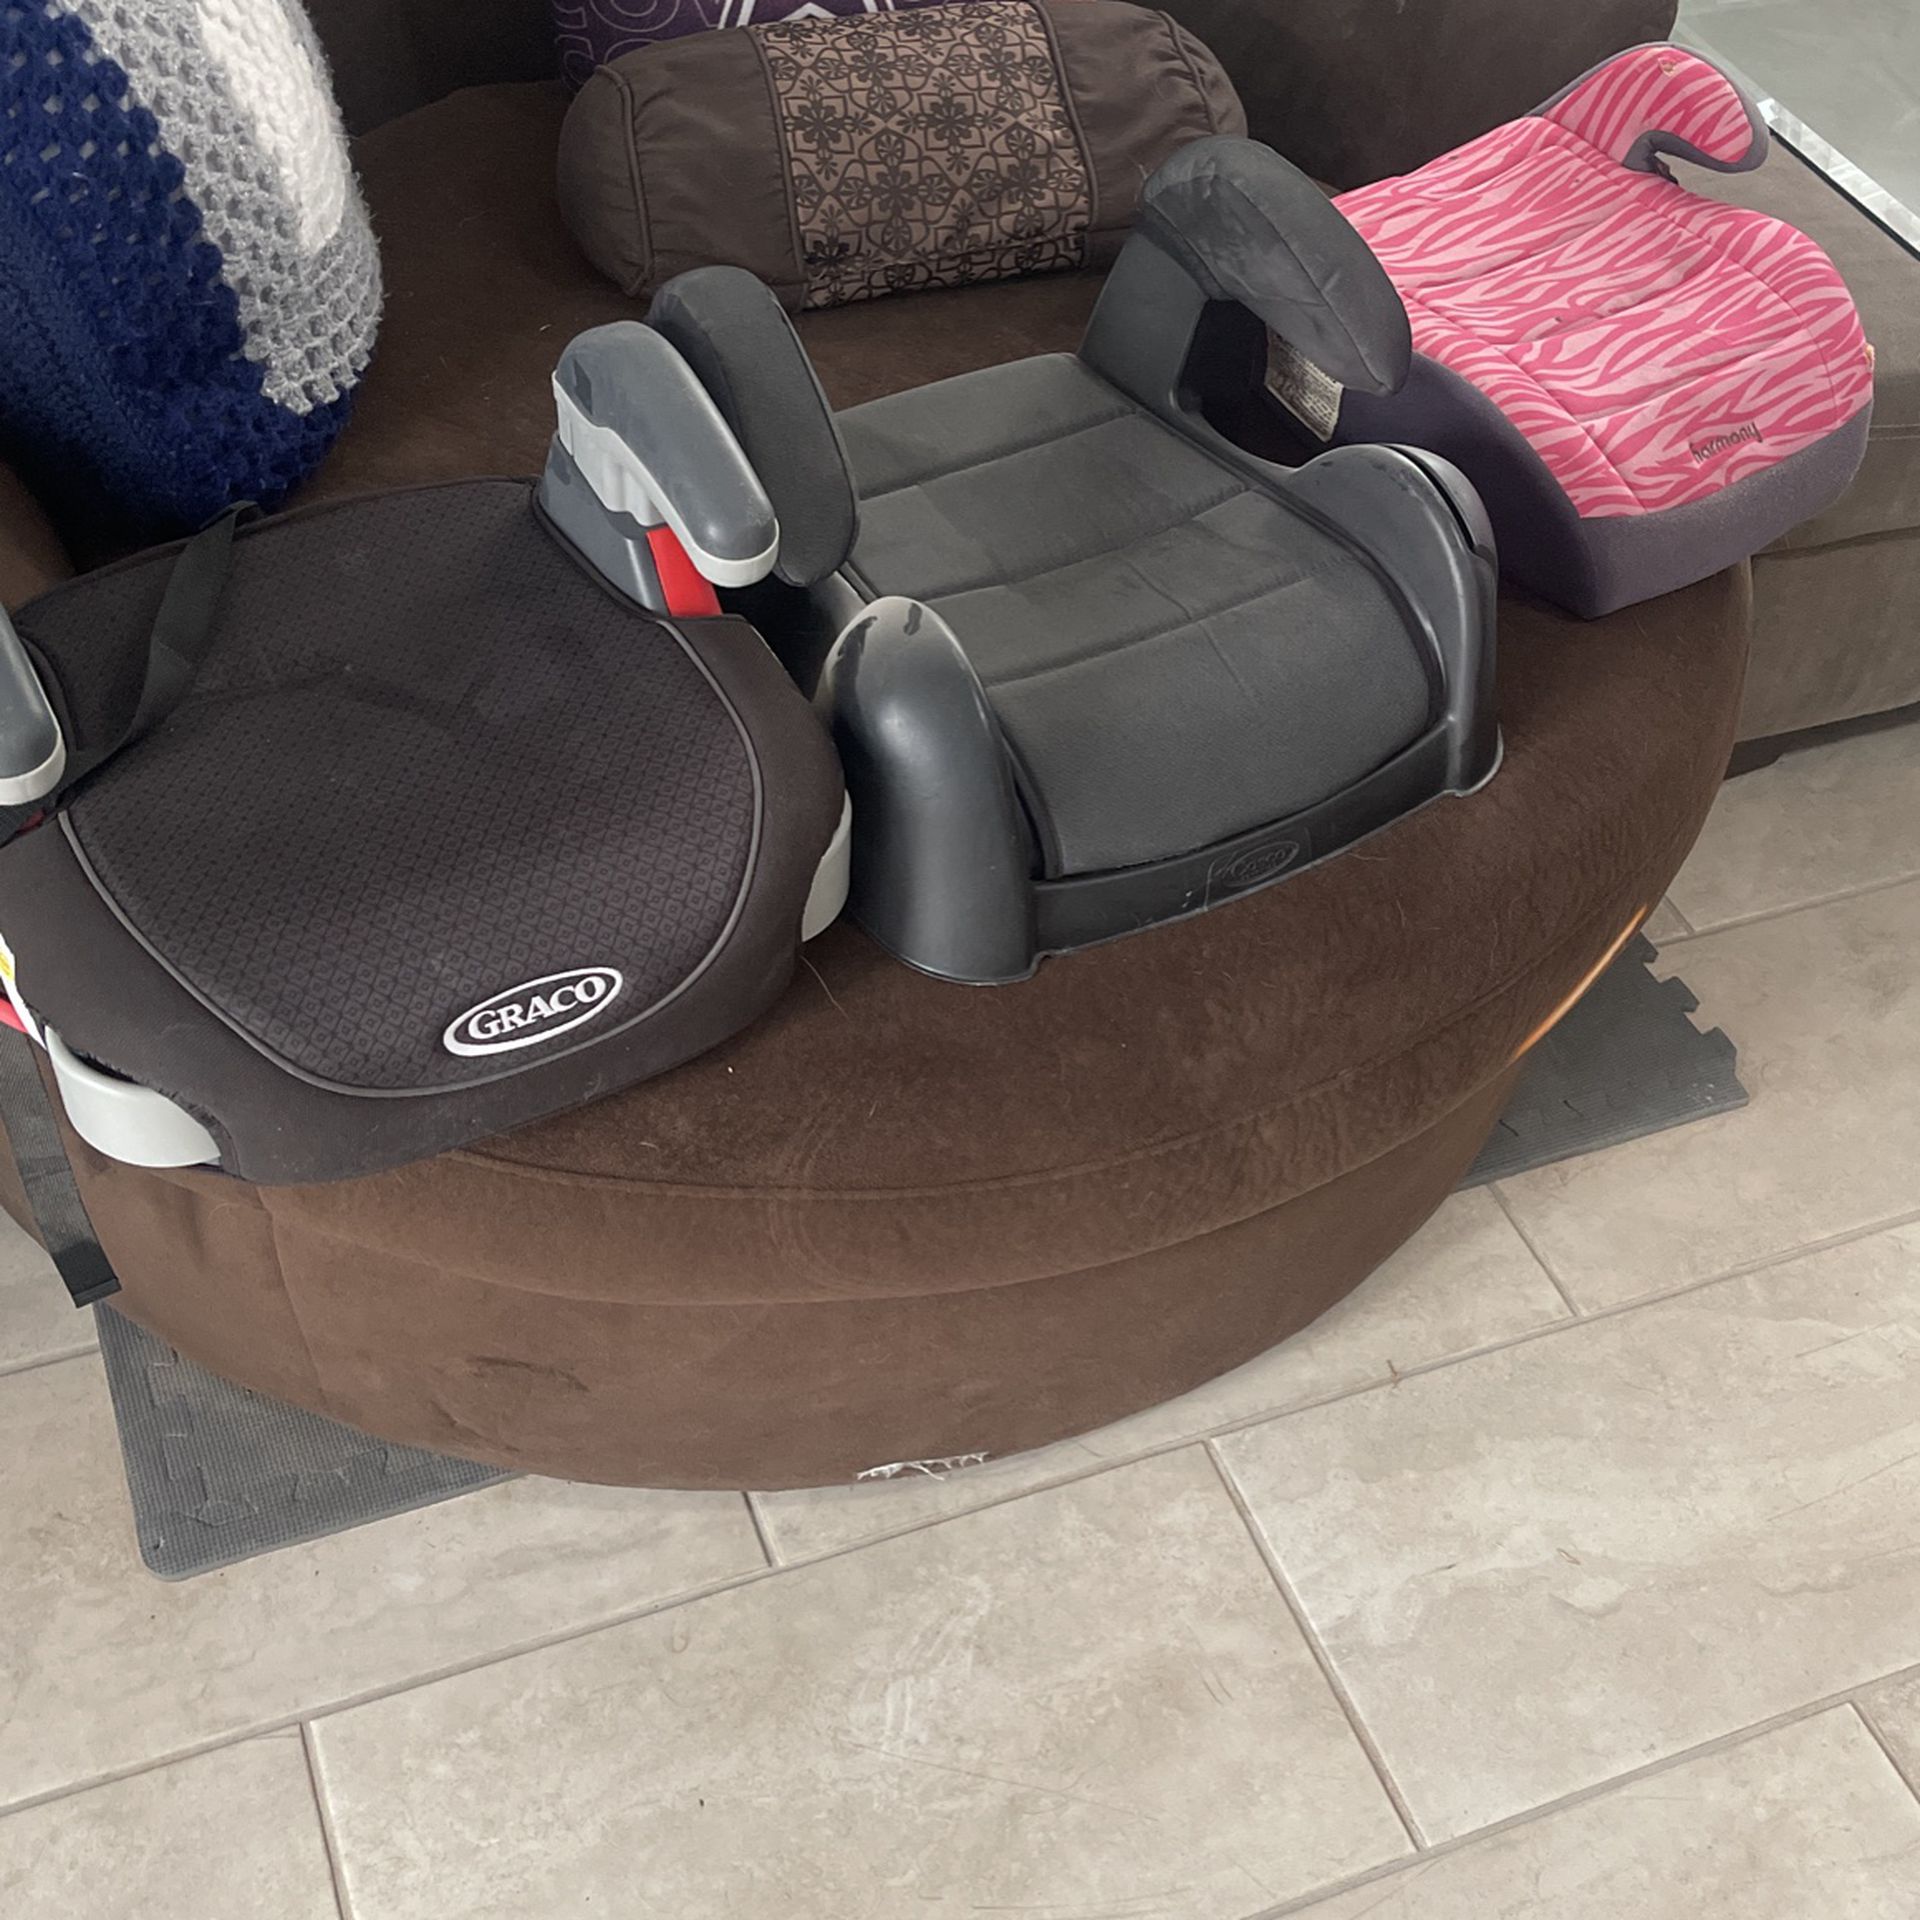 Booster car seats